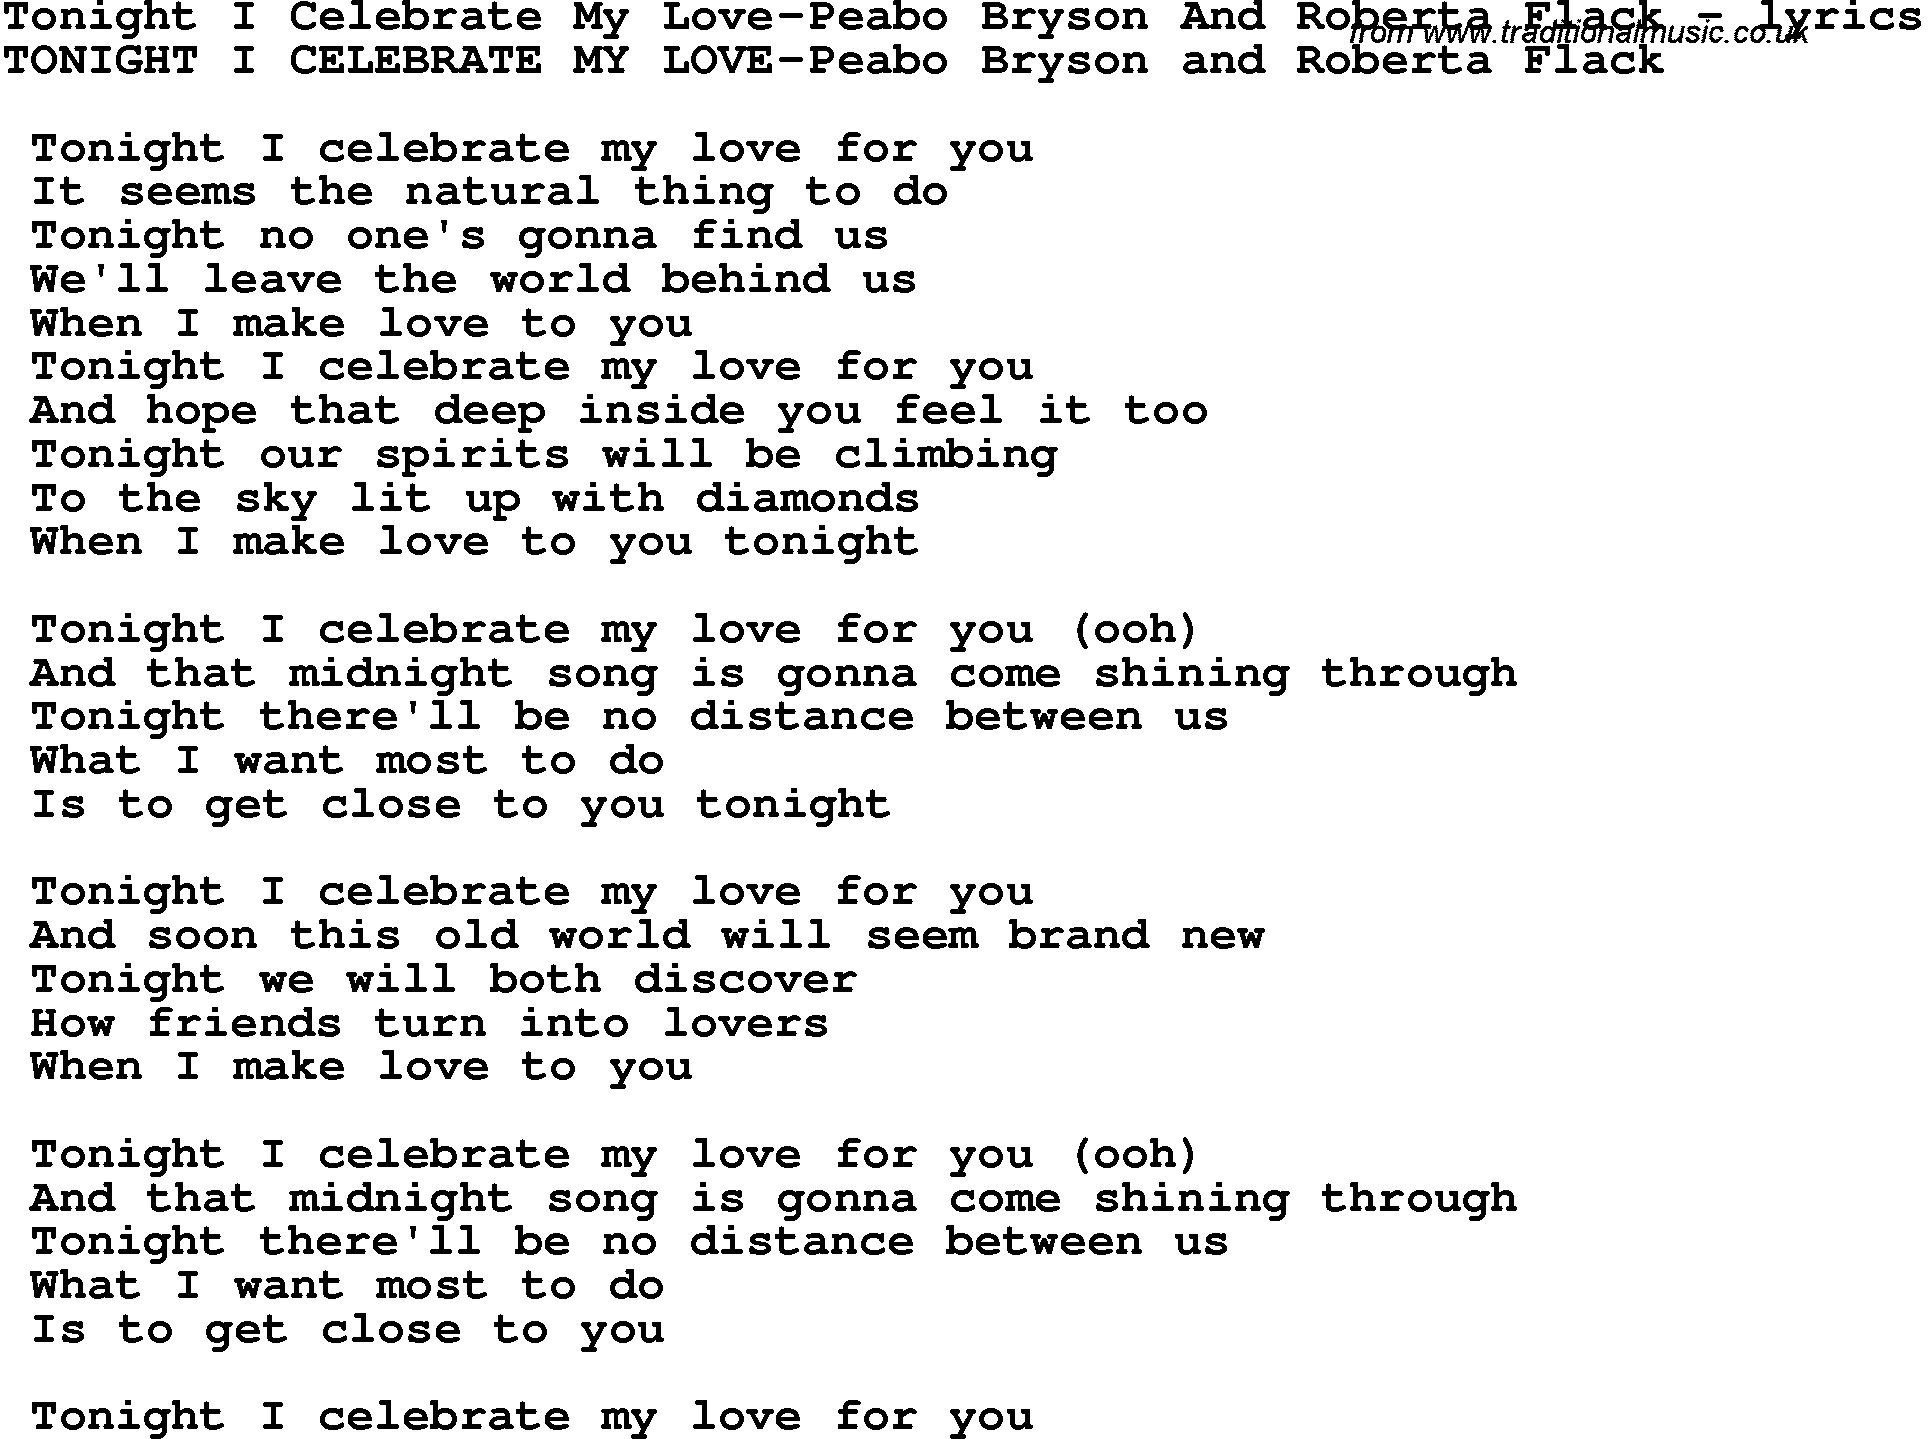 Love Song Lyrics for: Tonight I Celebrate My Love-Peabo Bryson And Roberta Flack